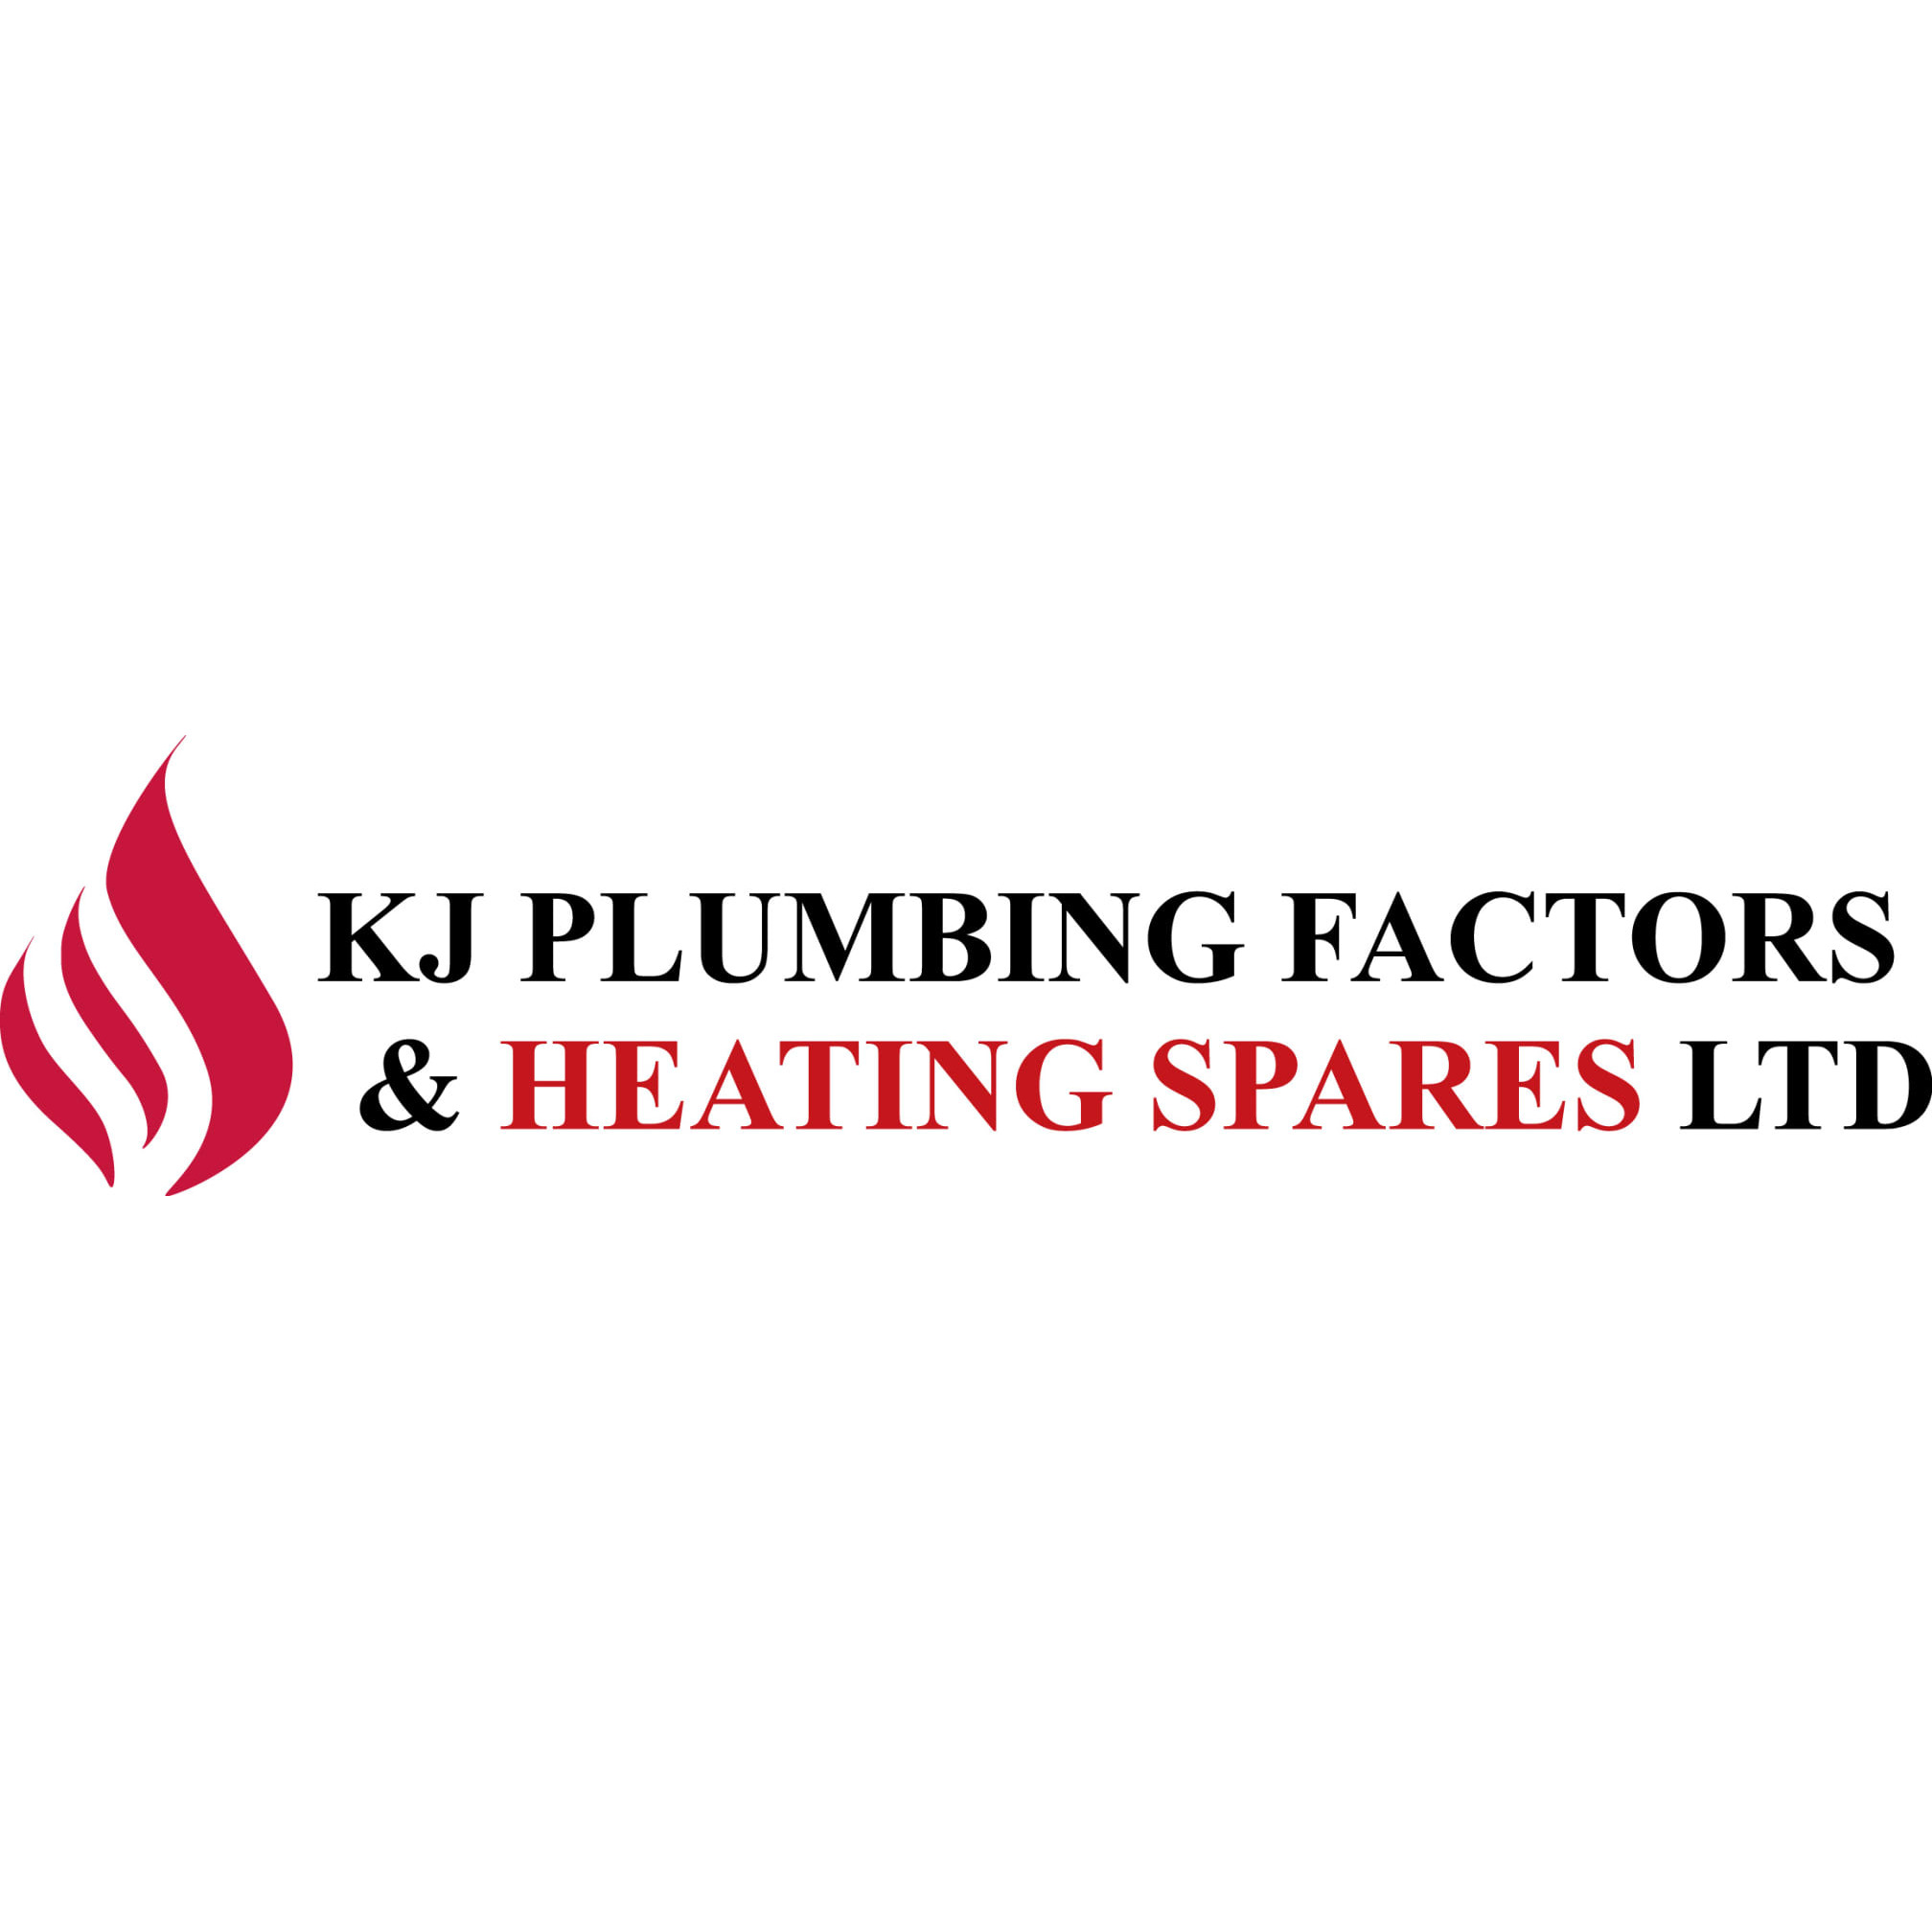 K.J Plumbing Factors & Heating Spares Ltd - Bury, Lancashire BL9 0SA - 01617 975222 | ShowMeLocal.com